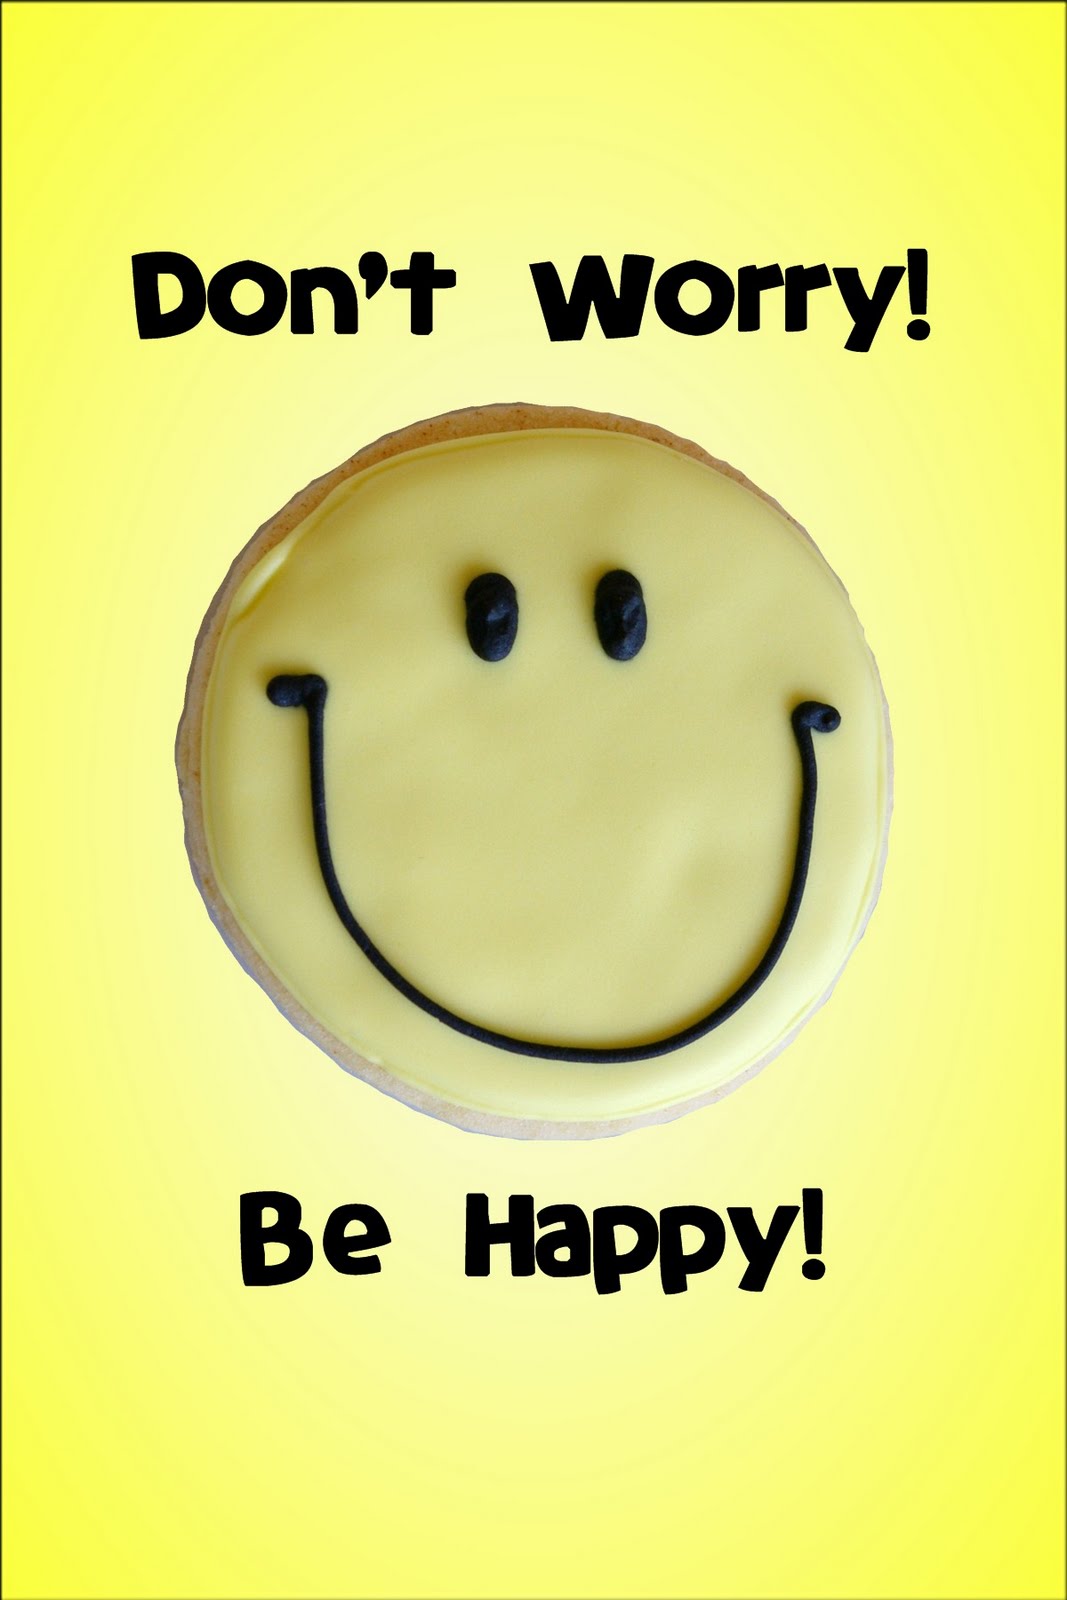 Don't worry...be happy!.jpg